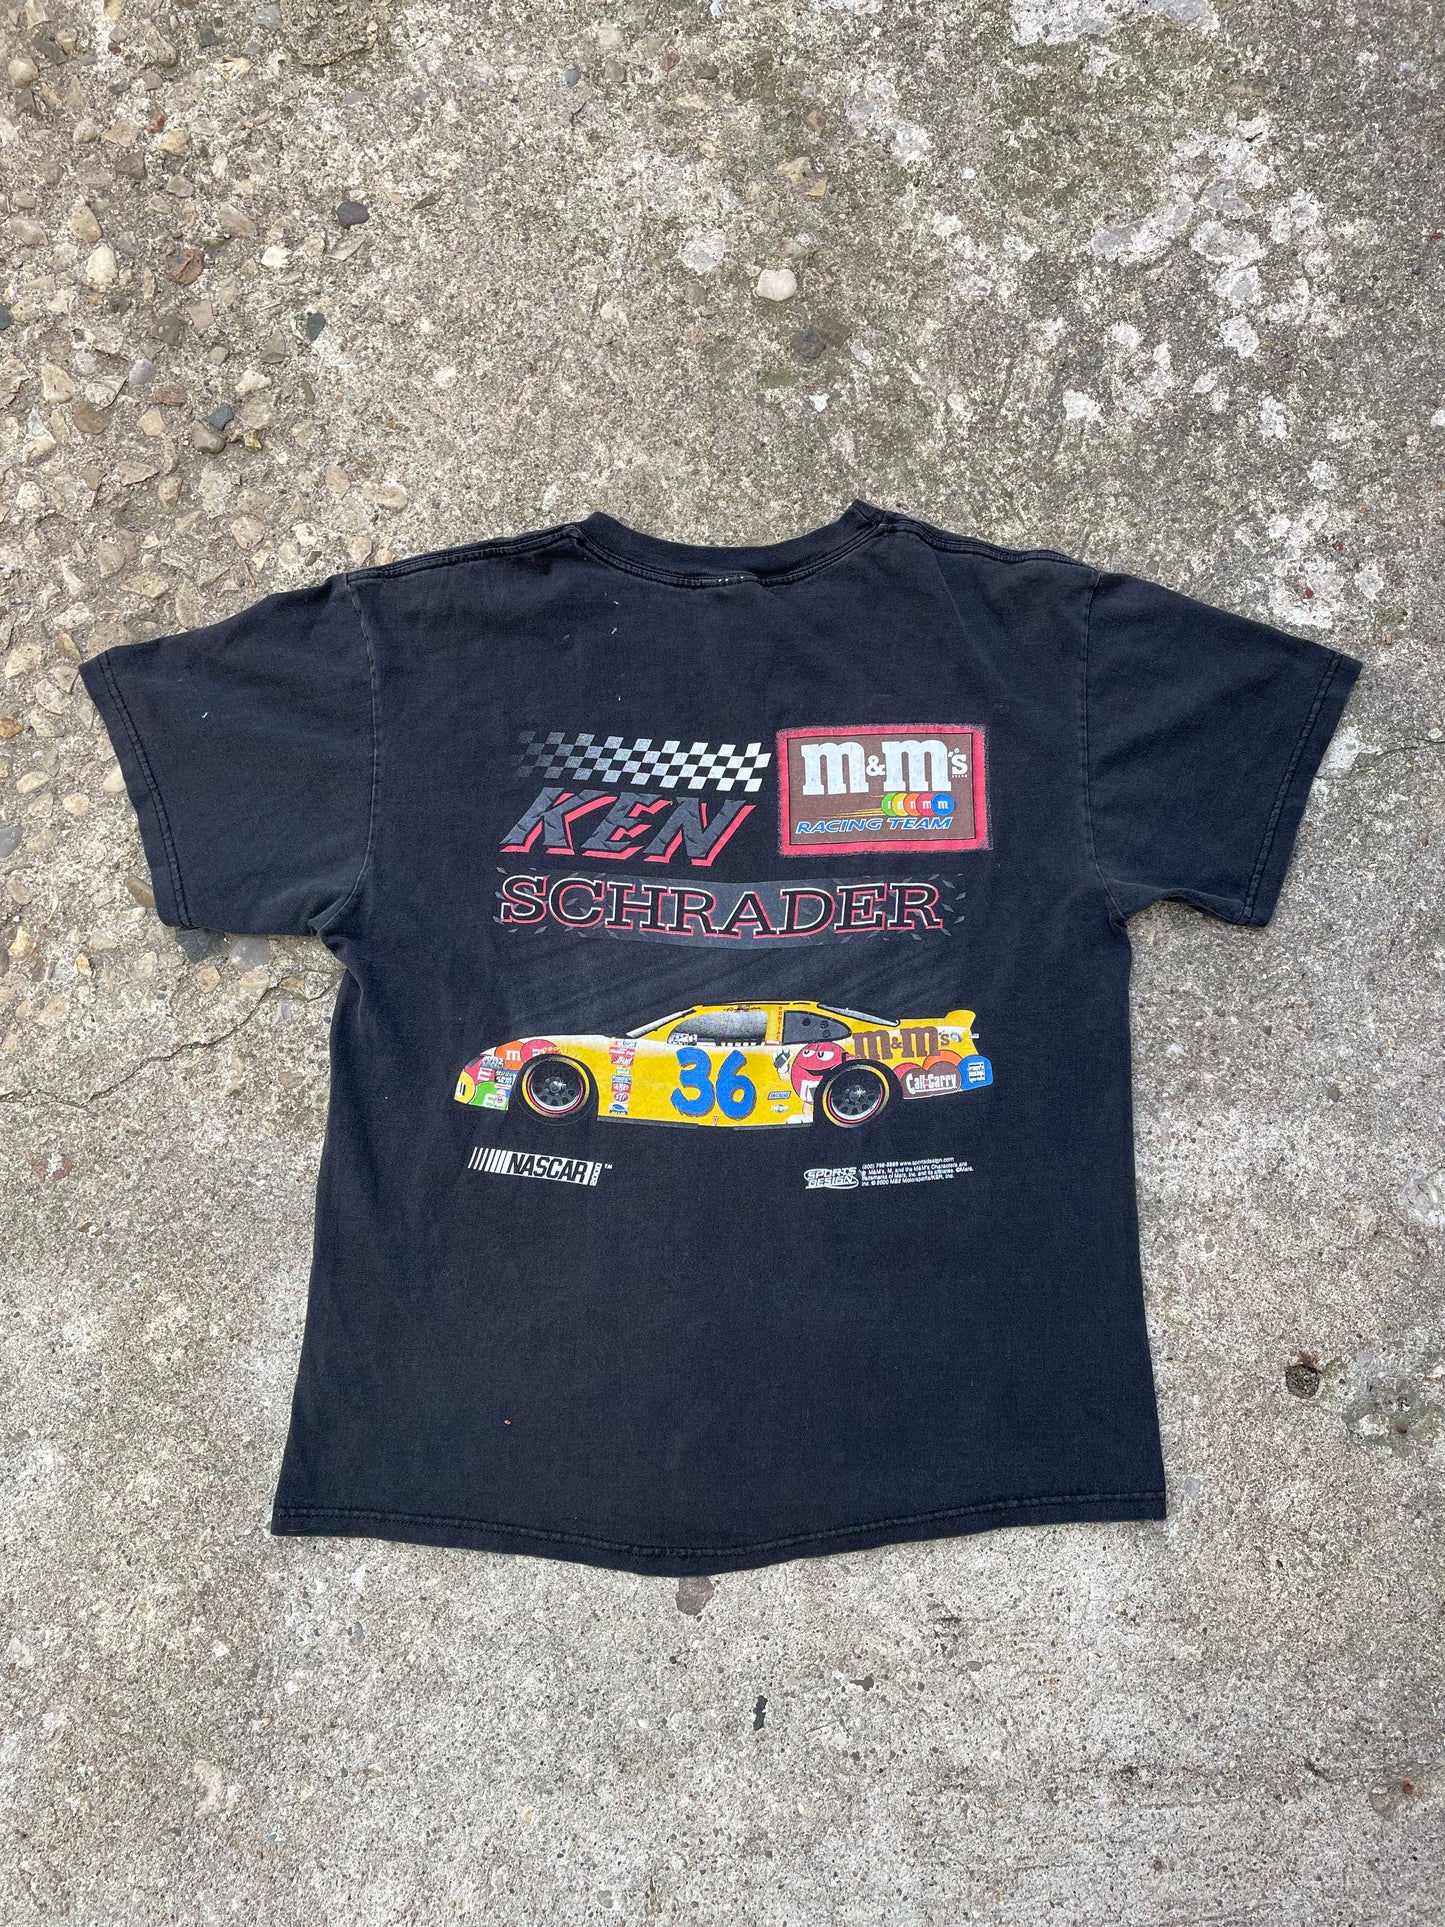 2000 Nascar M&M's Racing Team T-Shirt - L